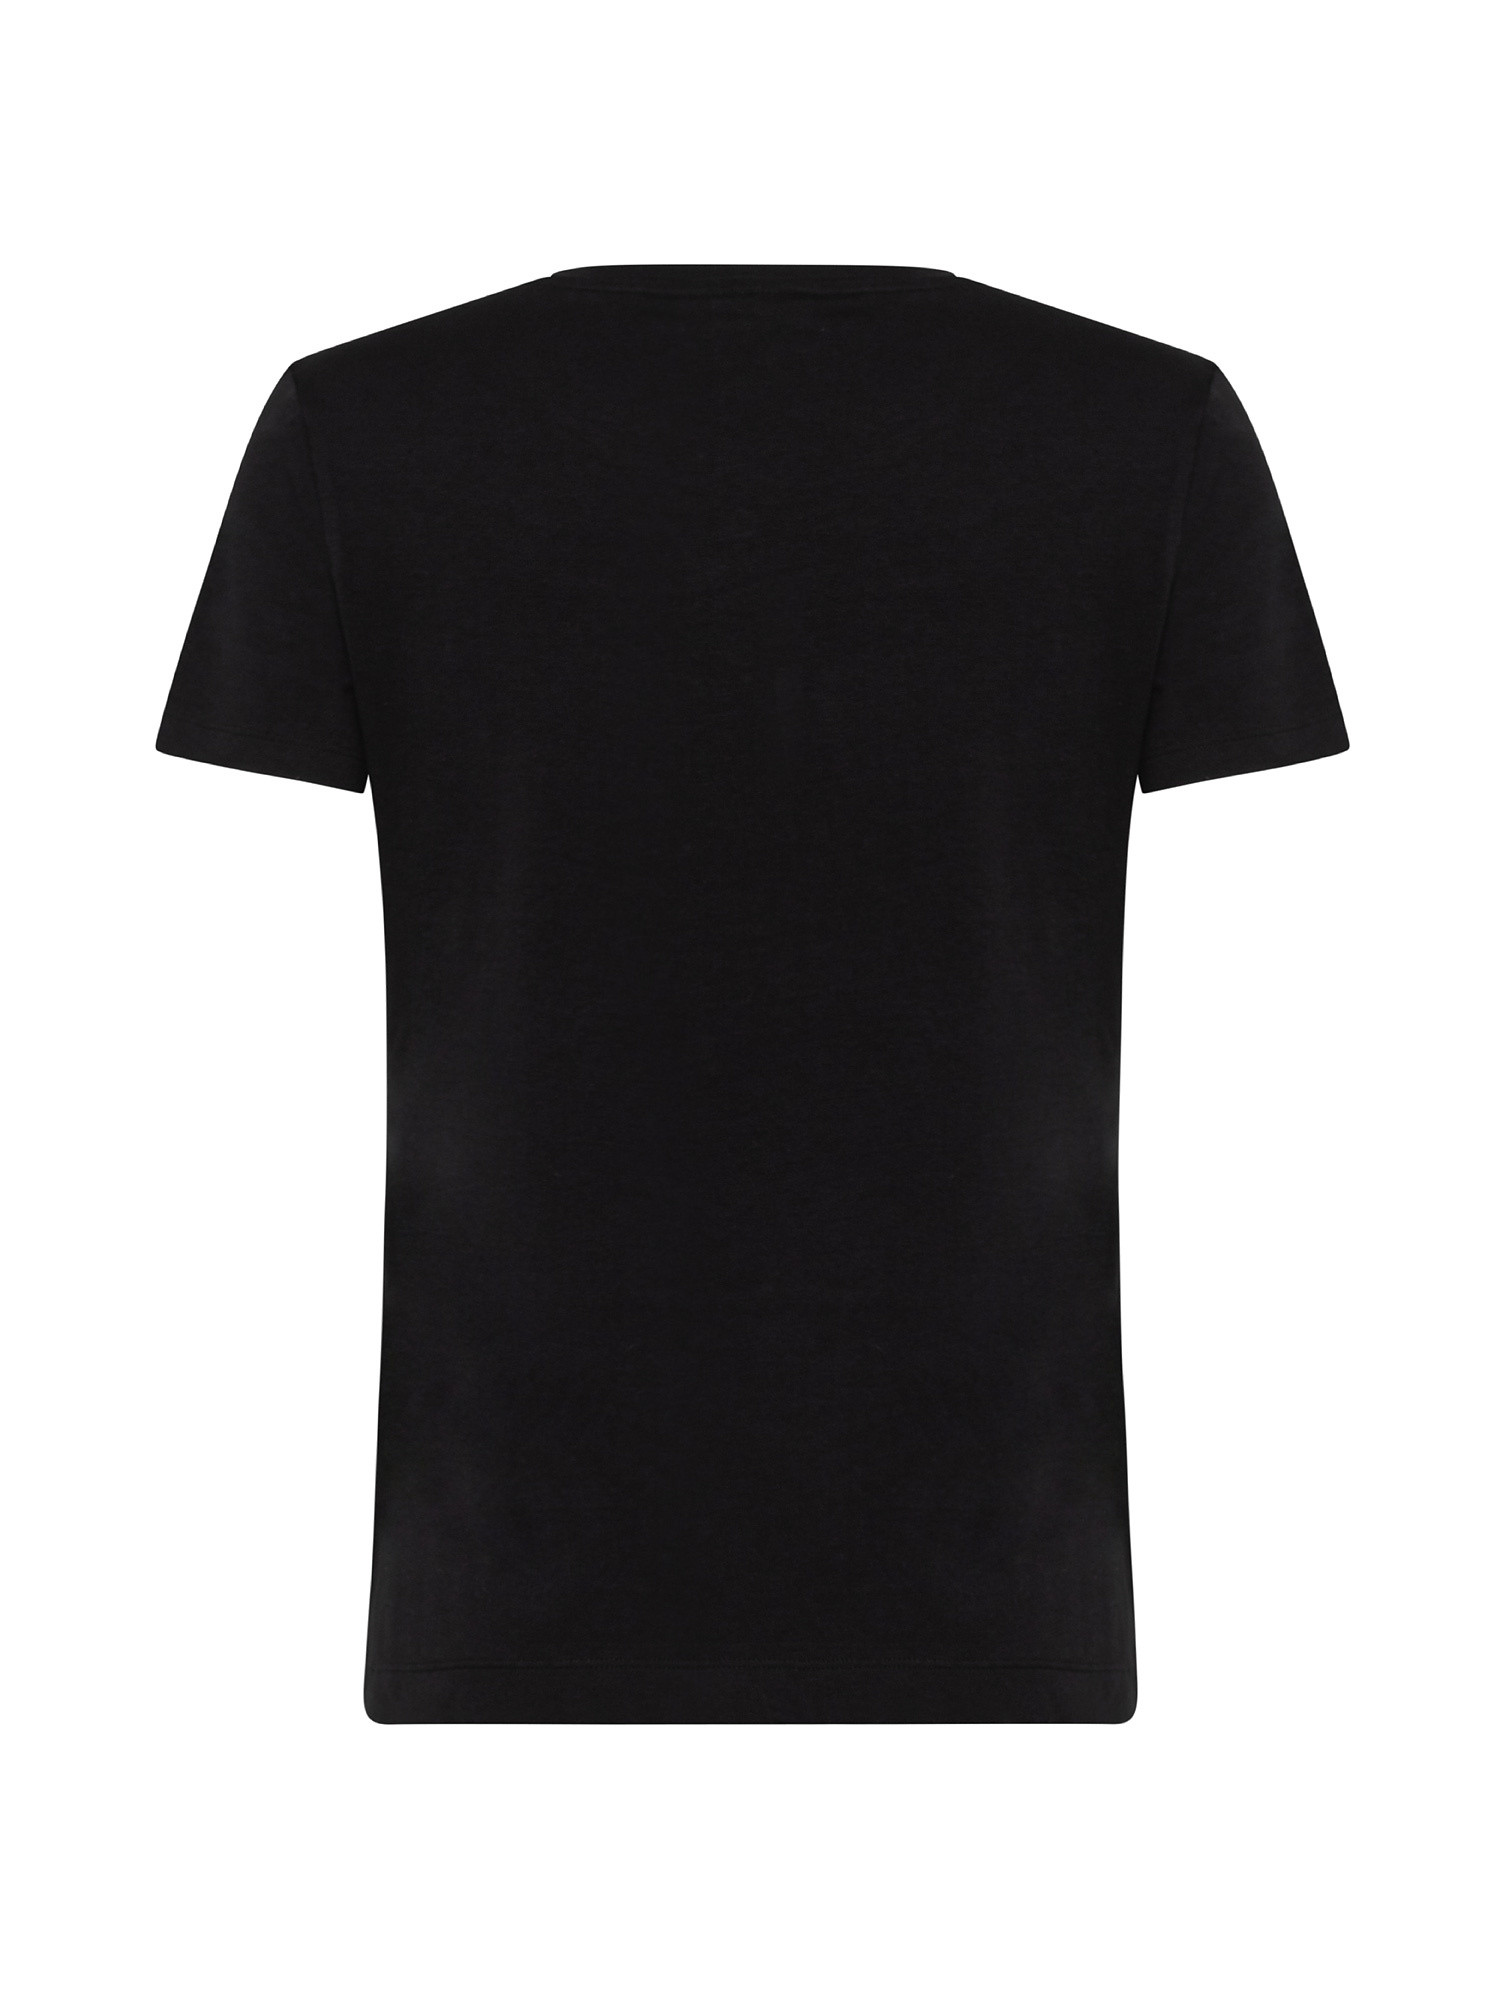 Palm logo T-shirt, Black, large image number 1